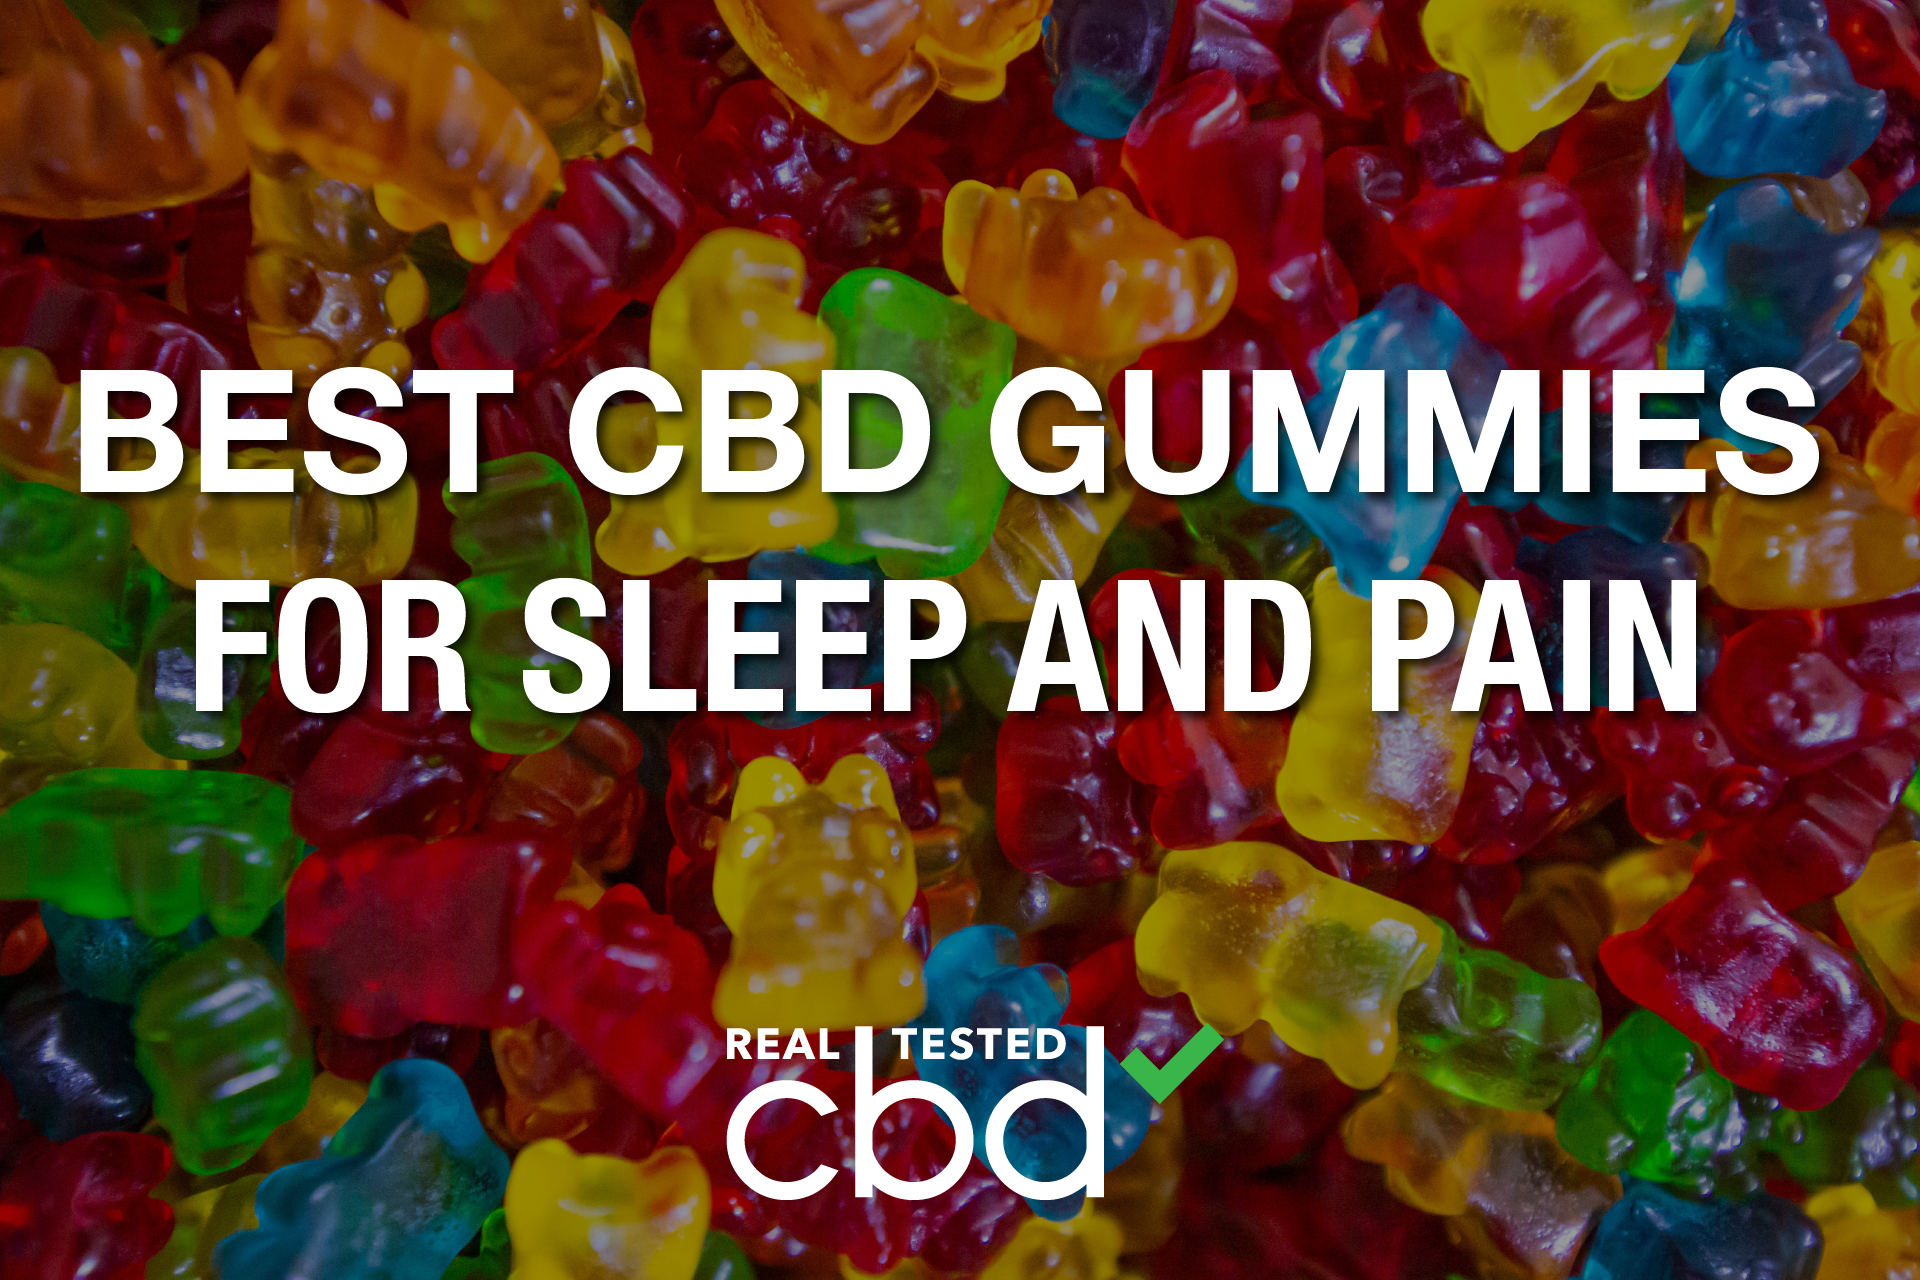 Effective Cbd Gummies For Sleep And Pain Sponsored Content News Blog